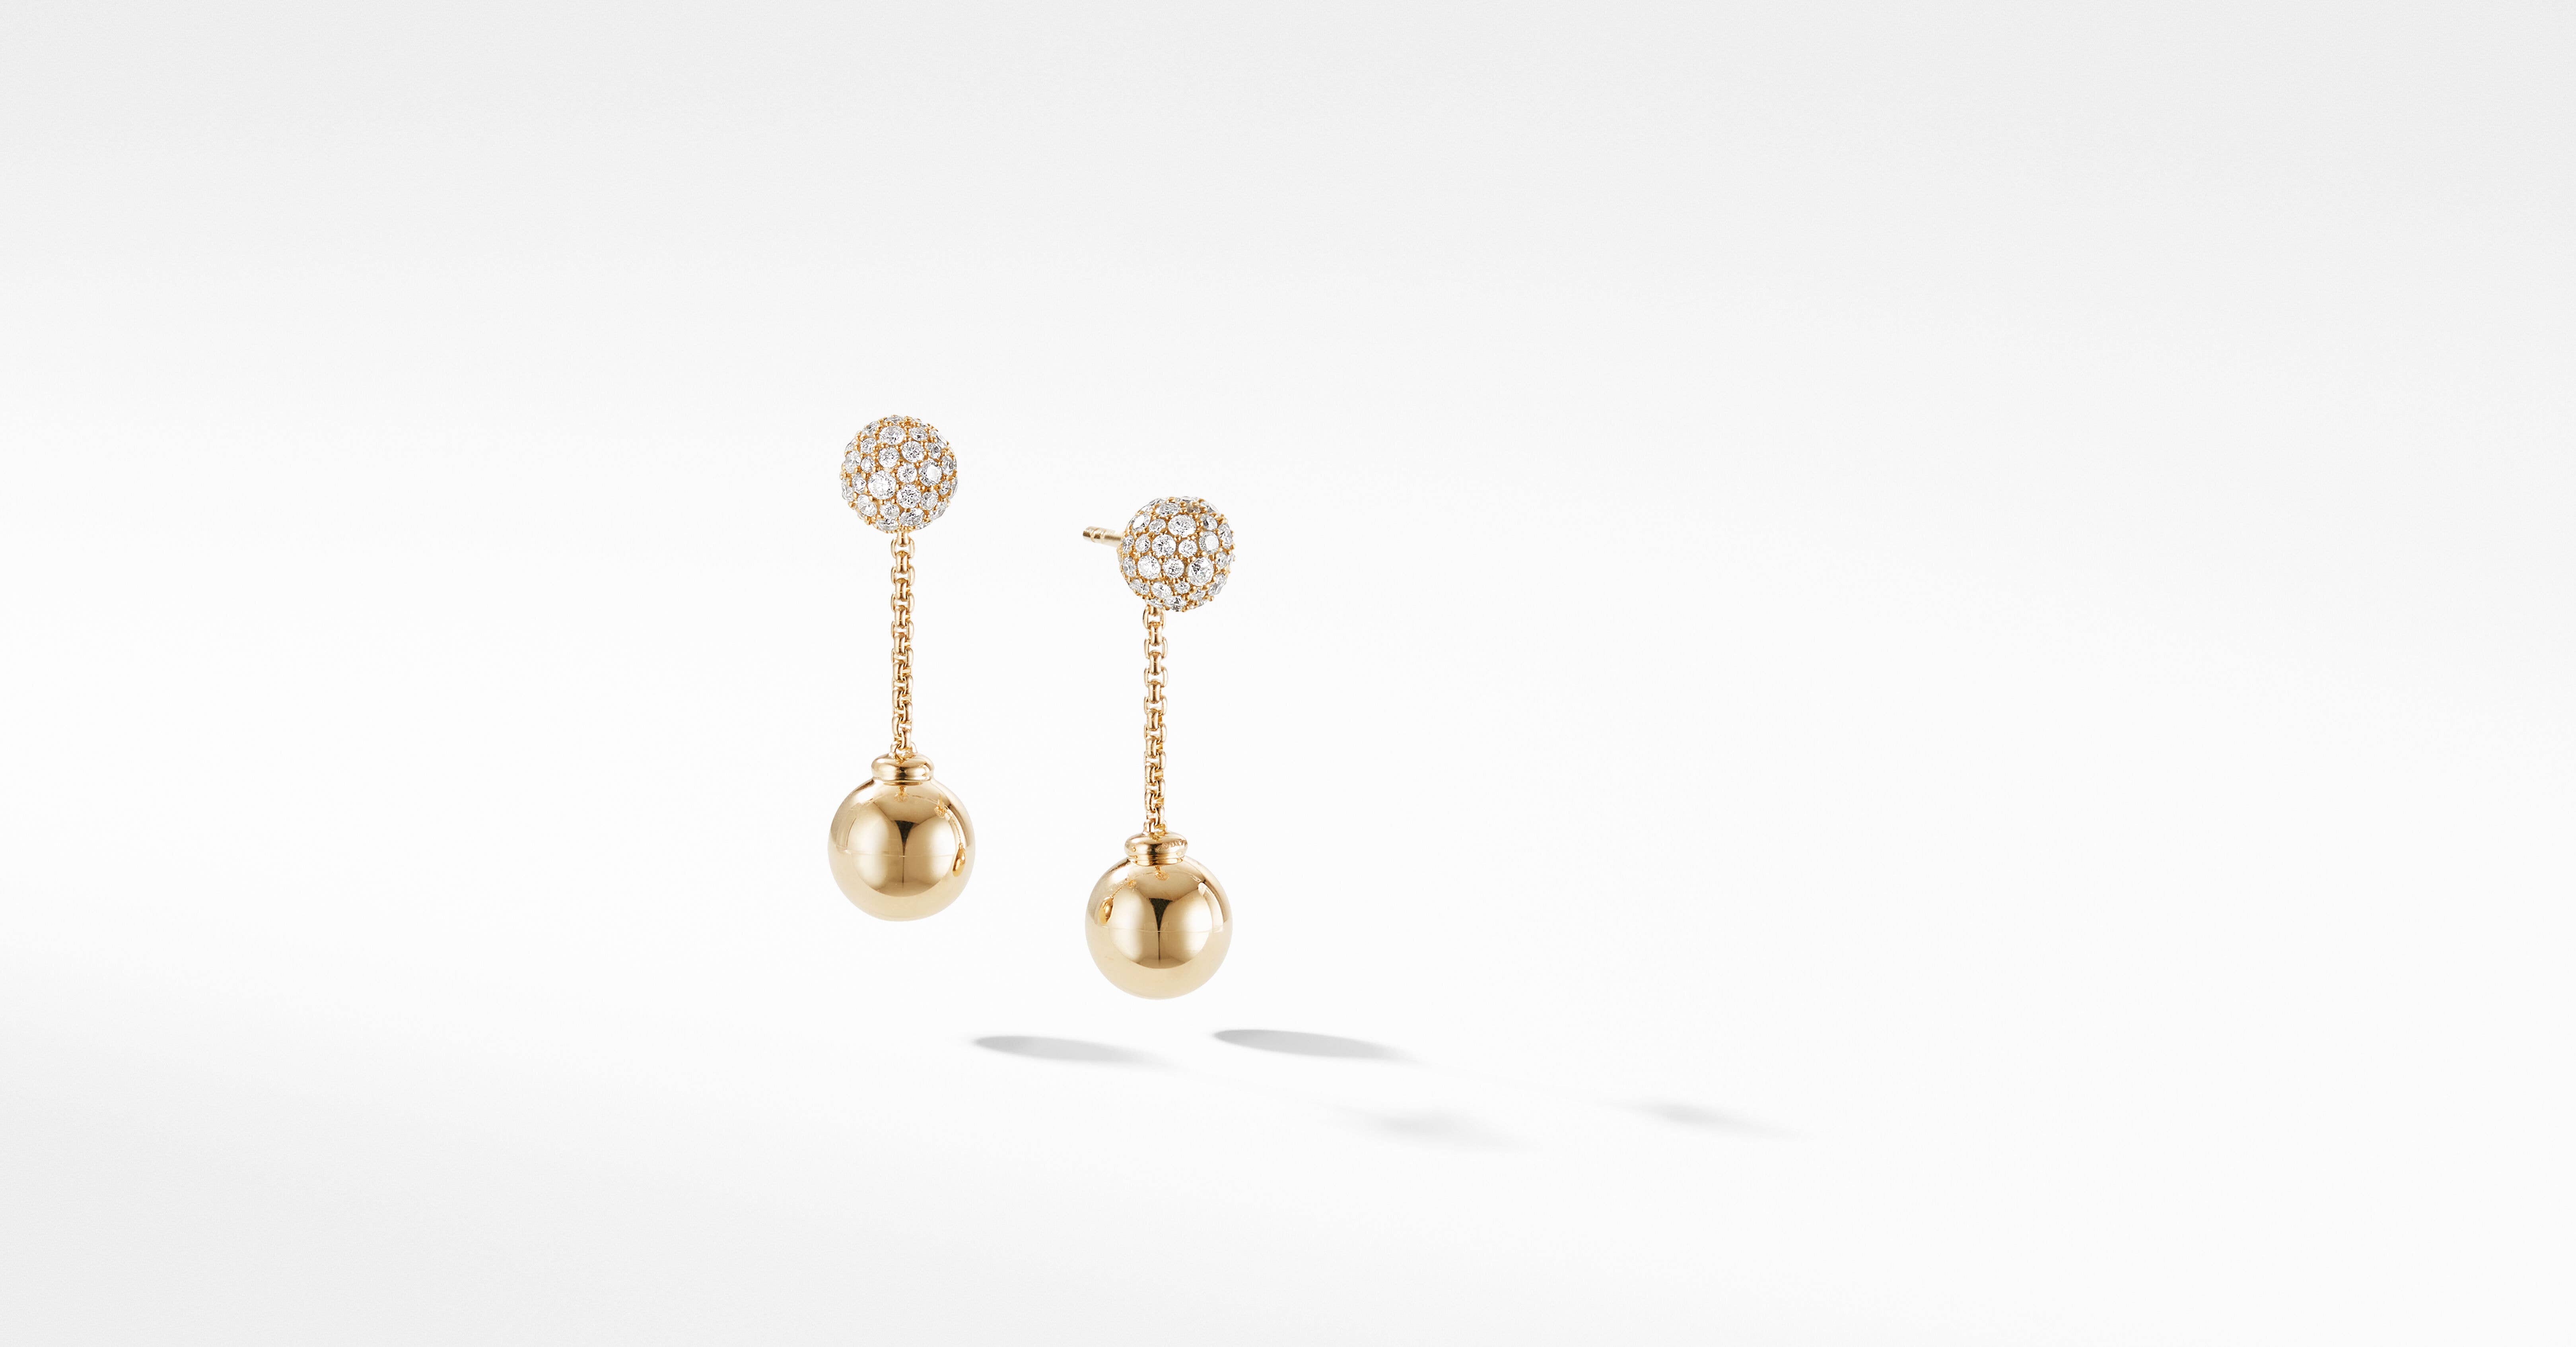 Solari Chain Drop Earrings in 18K Yellow Gold with Pavé Diamonds